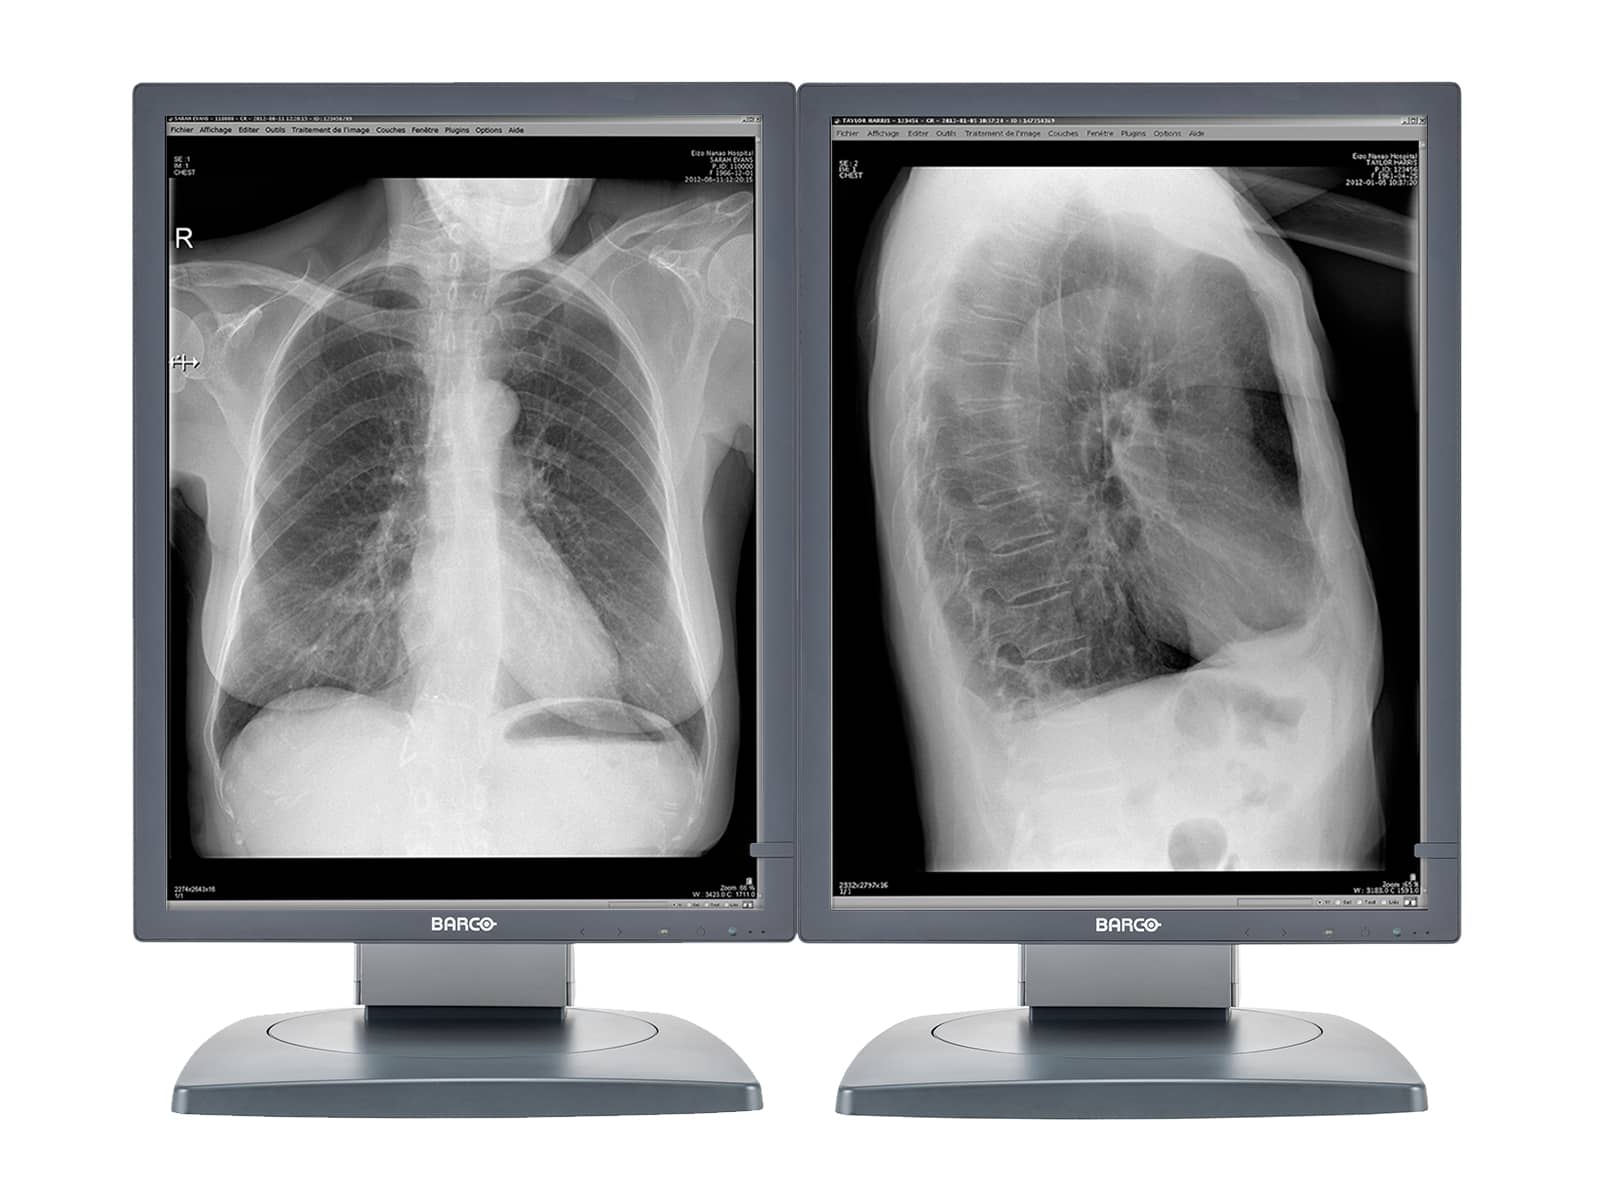 Barco Coronis MDCG-3120 Pantalla de diagnóstico de radiología general en escala de grises de 21" (K9601662) Monitors.com